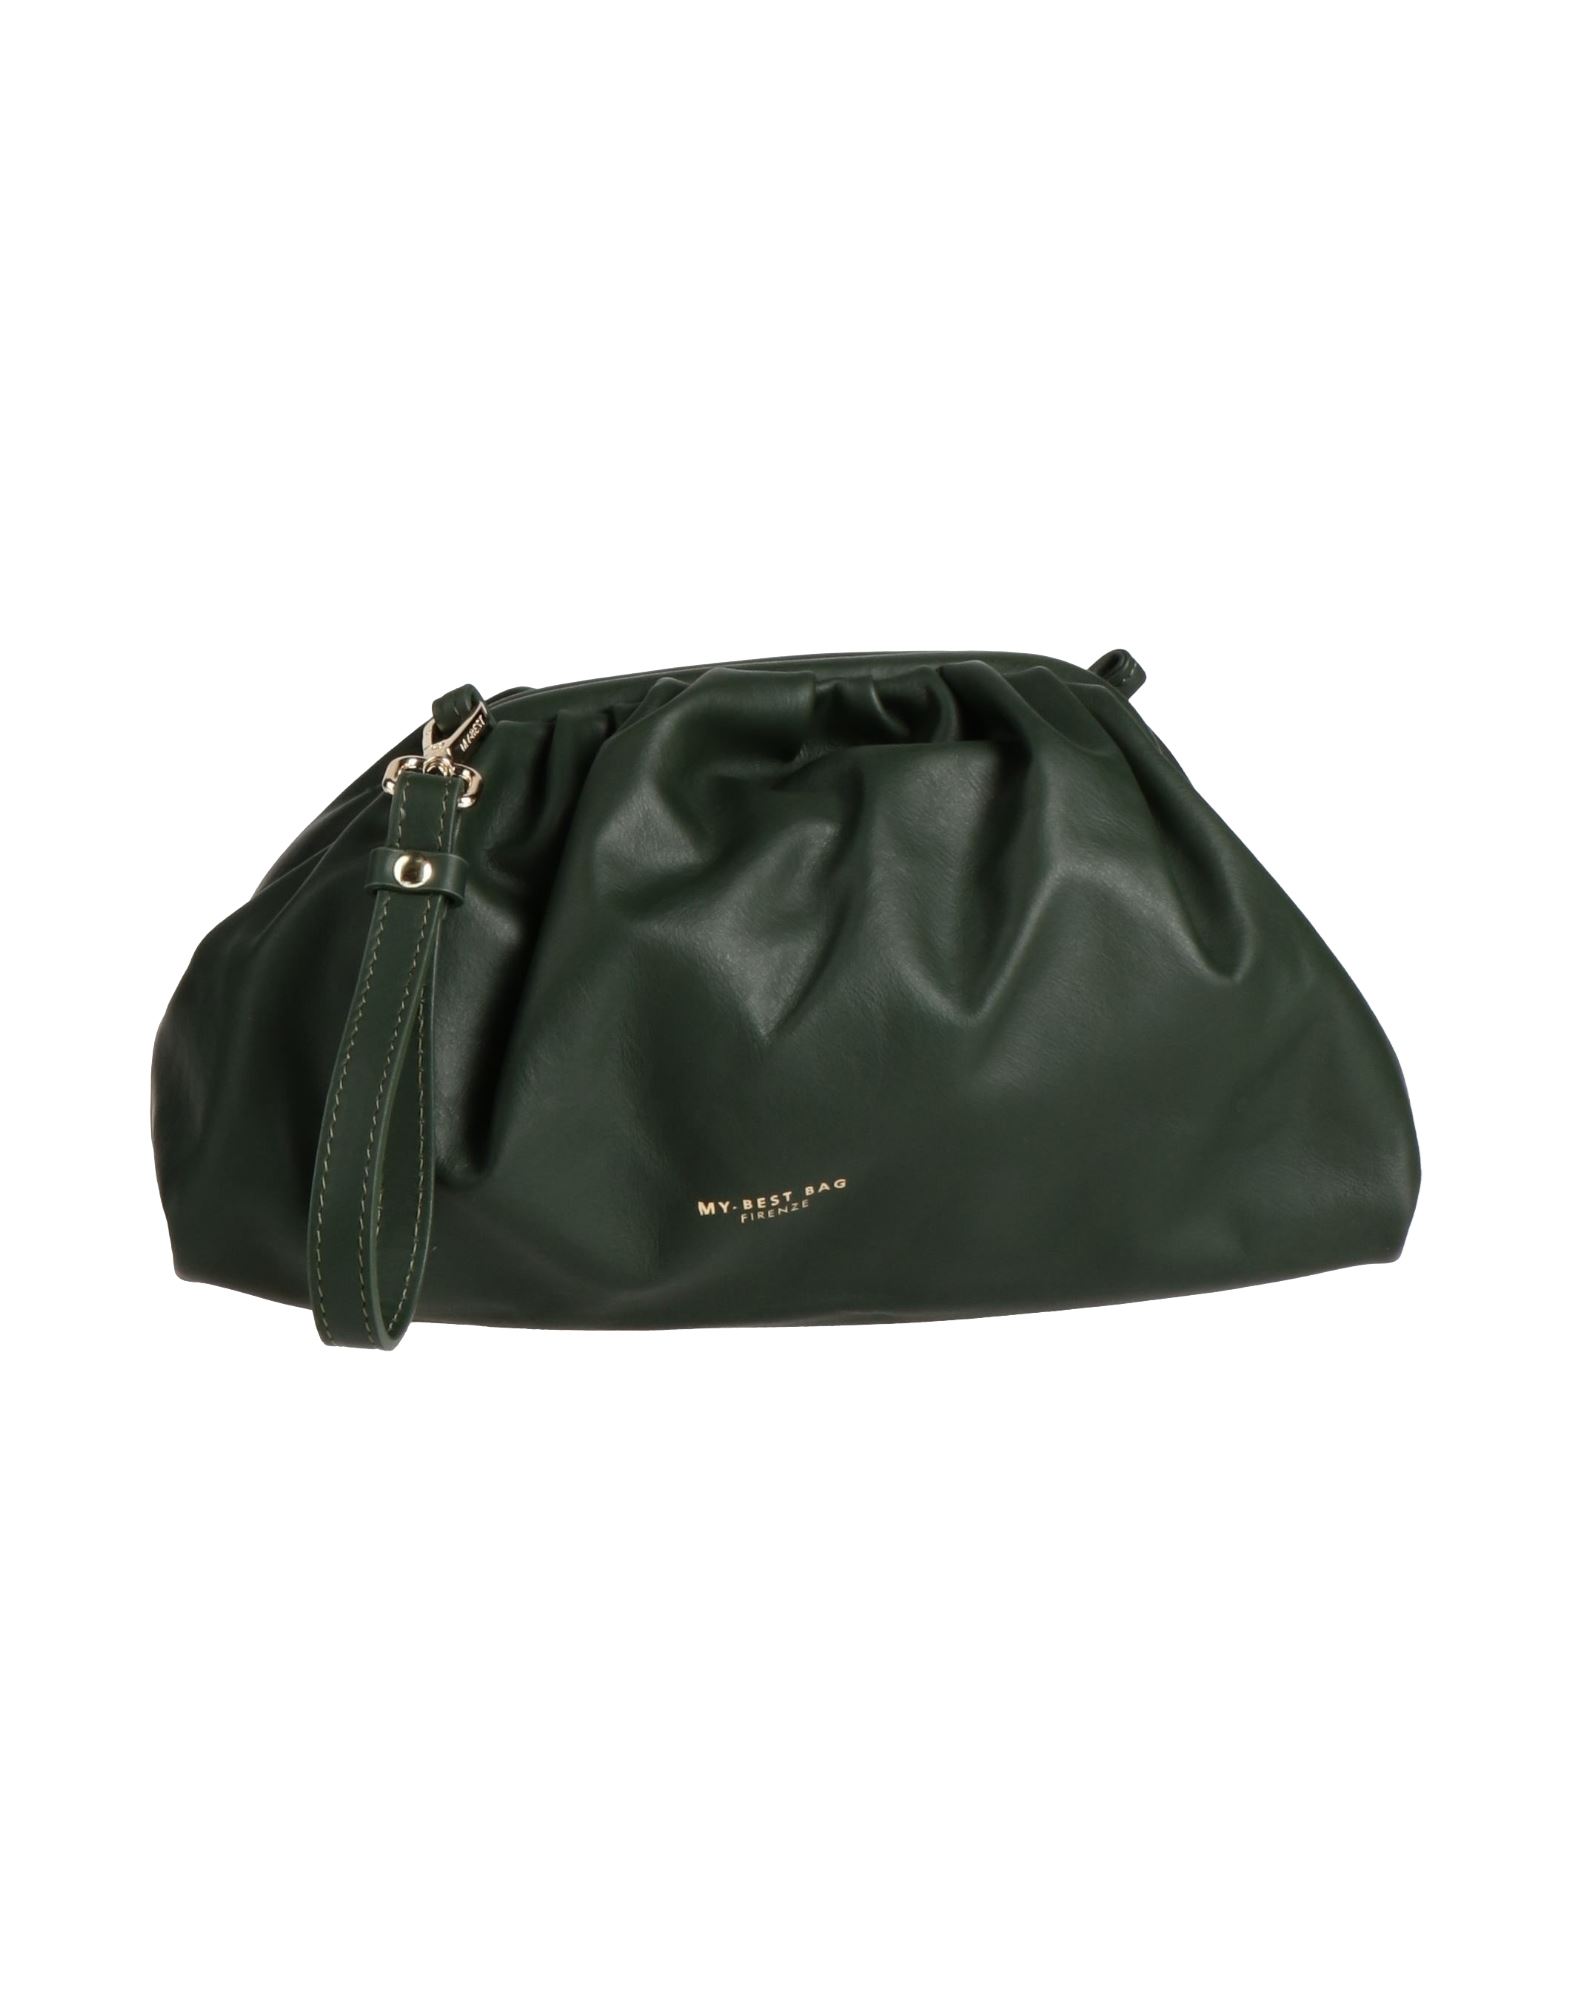 Show me your favorite green bag : r/handbags